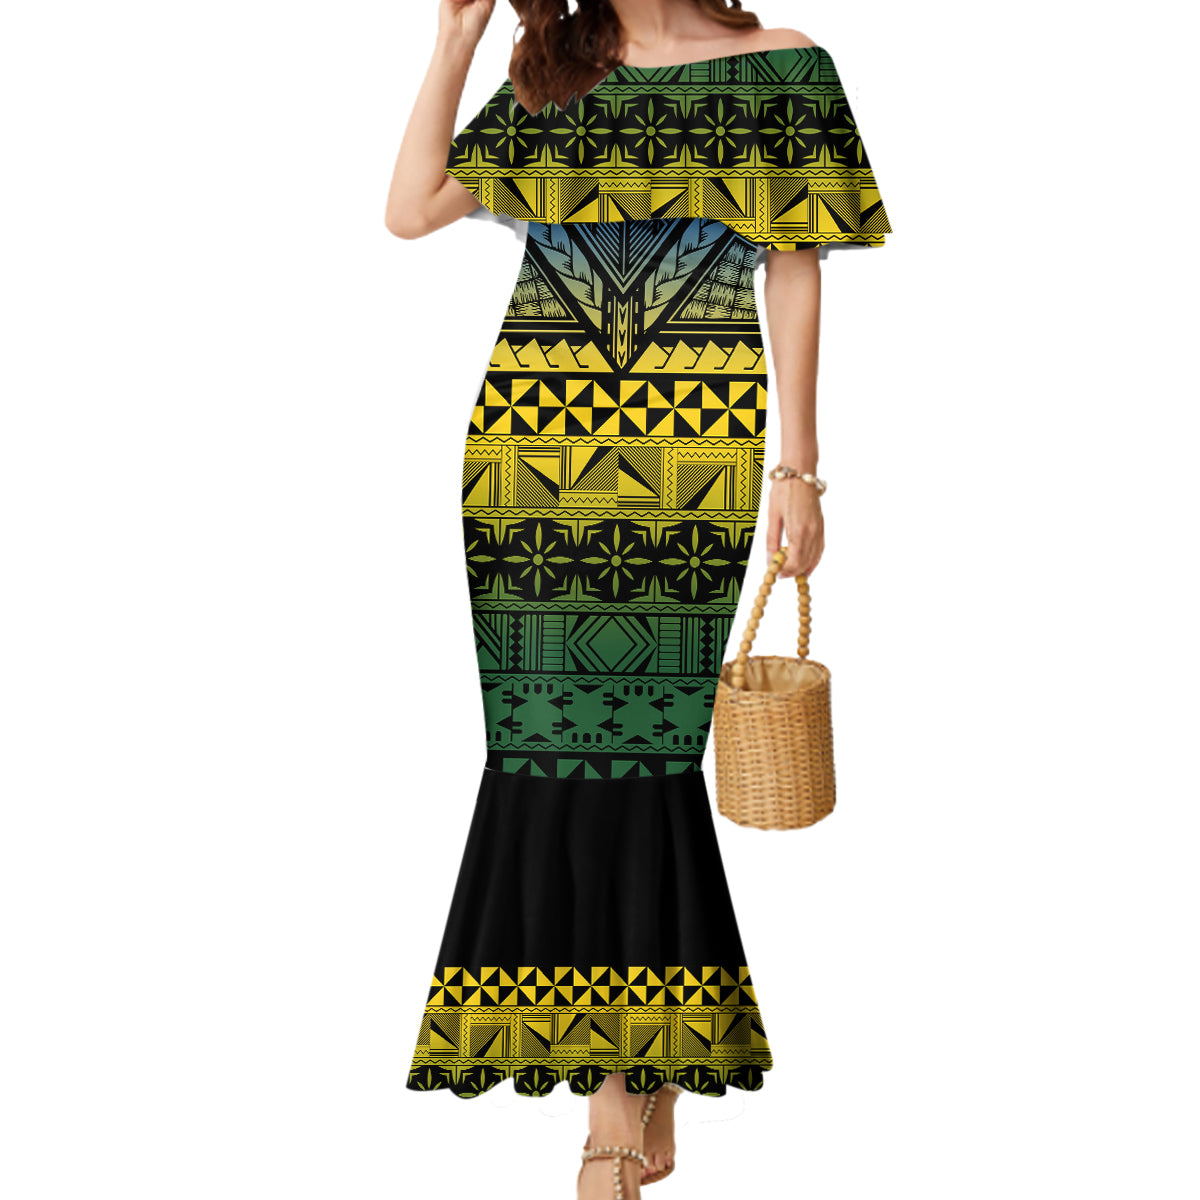 Halo Olaketa Solomon Islands Mermaid Dress Melanesian Tribal Pattern Gradient Version LT14 Women Black - Polynesian Pride